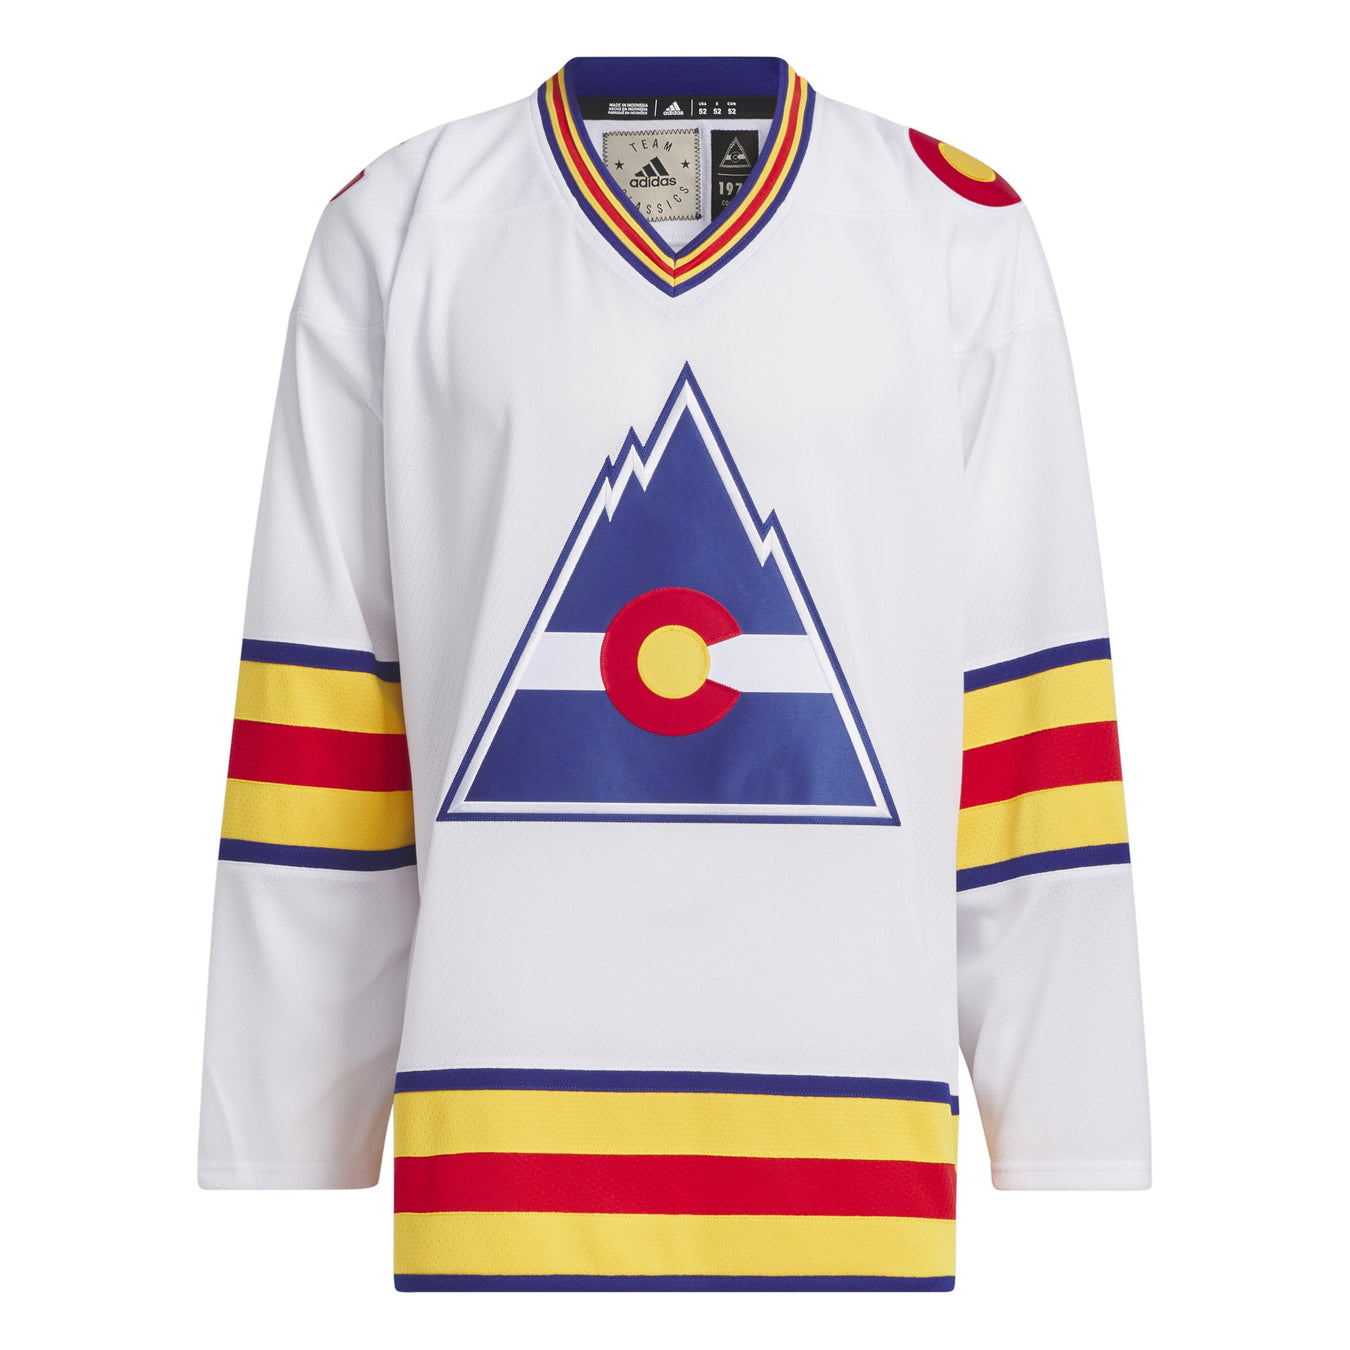 Colorado Rockies NHL Official Licensed Merchandise